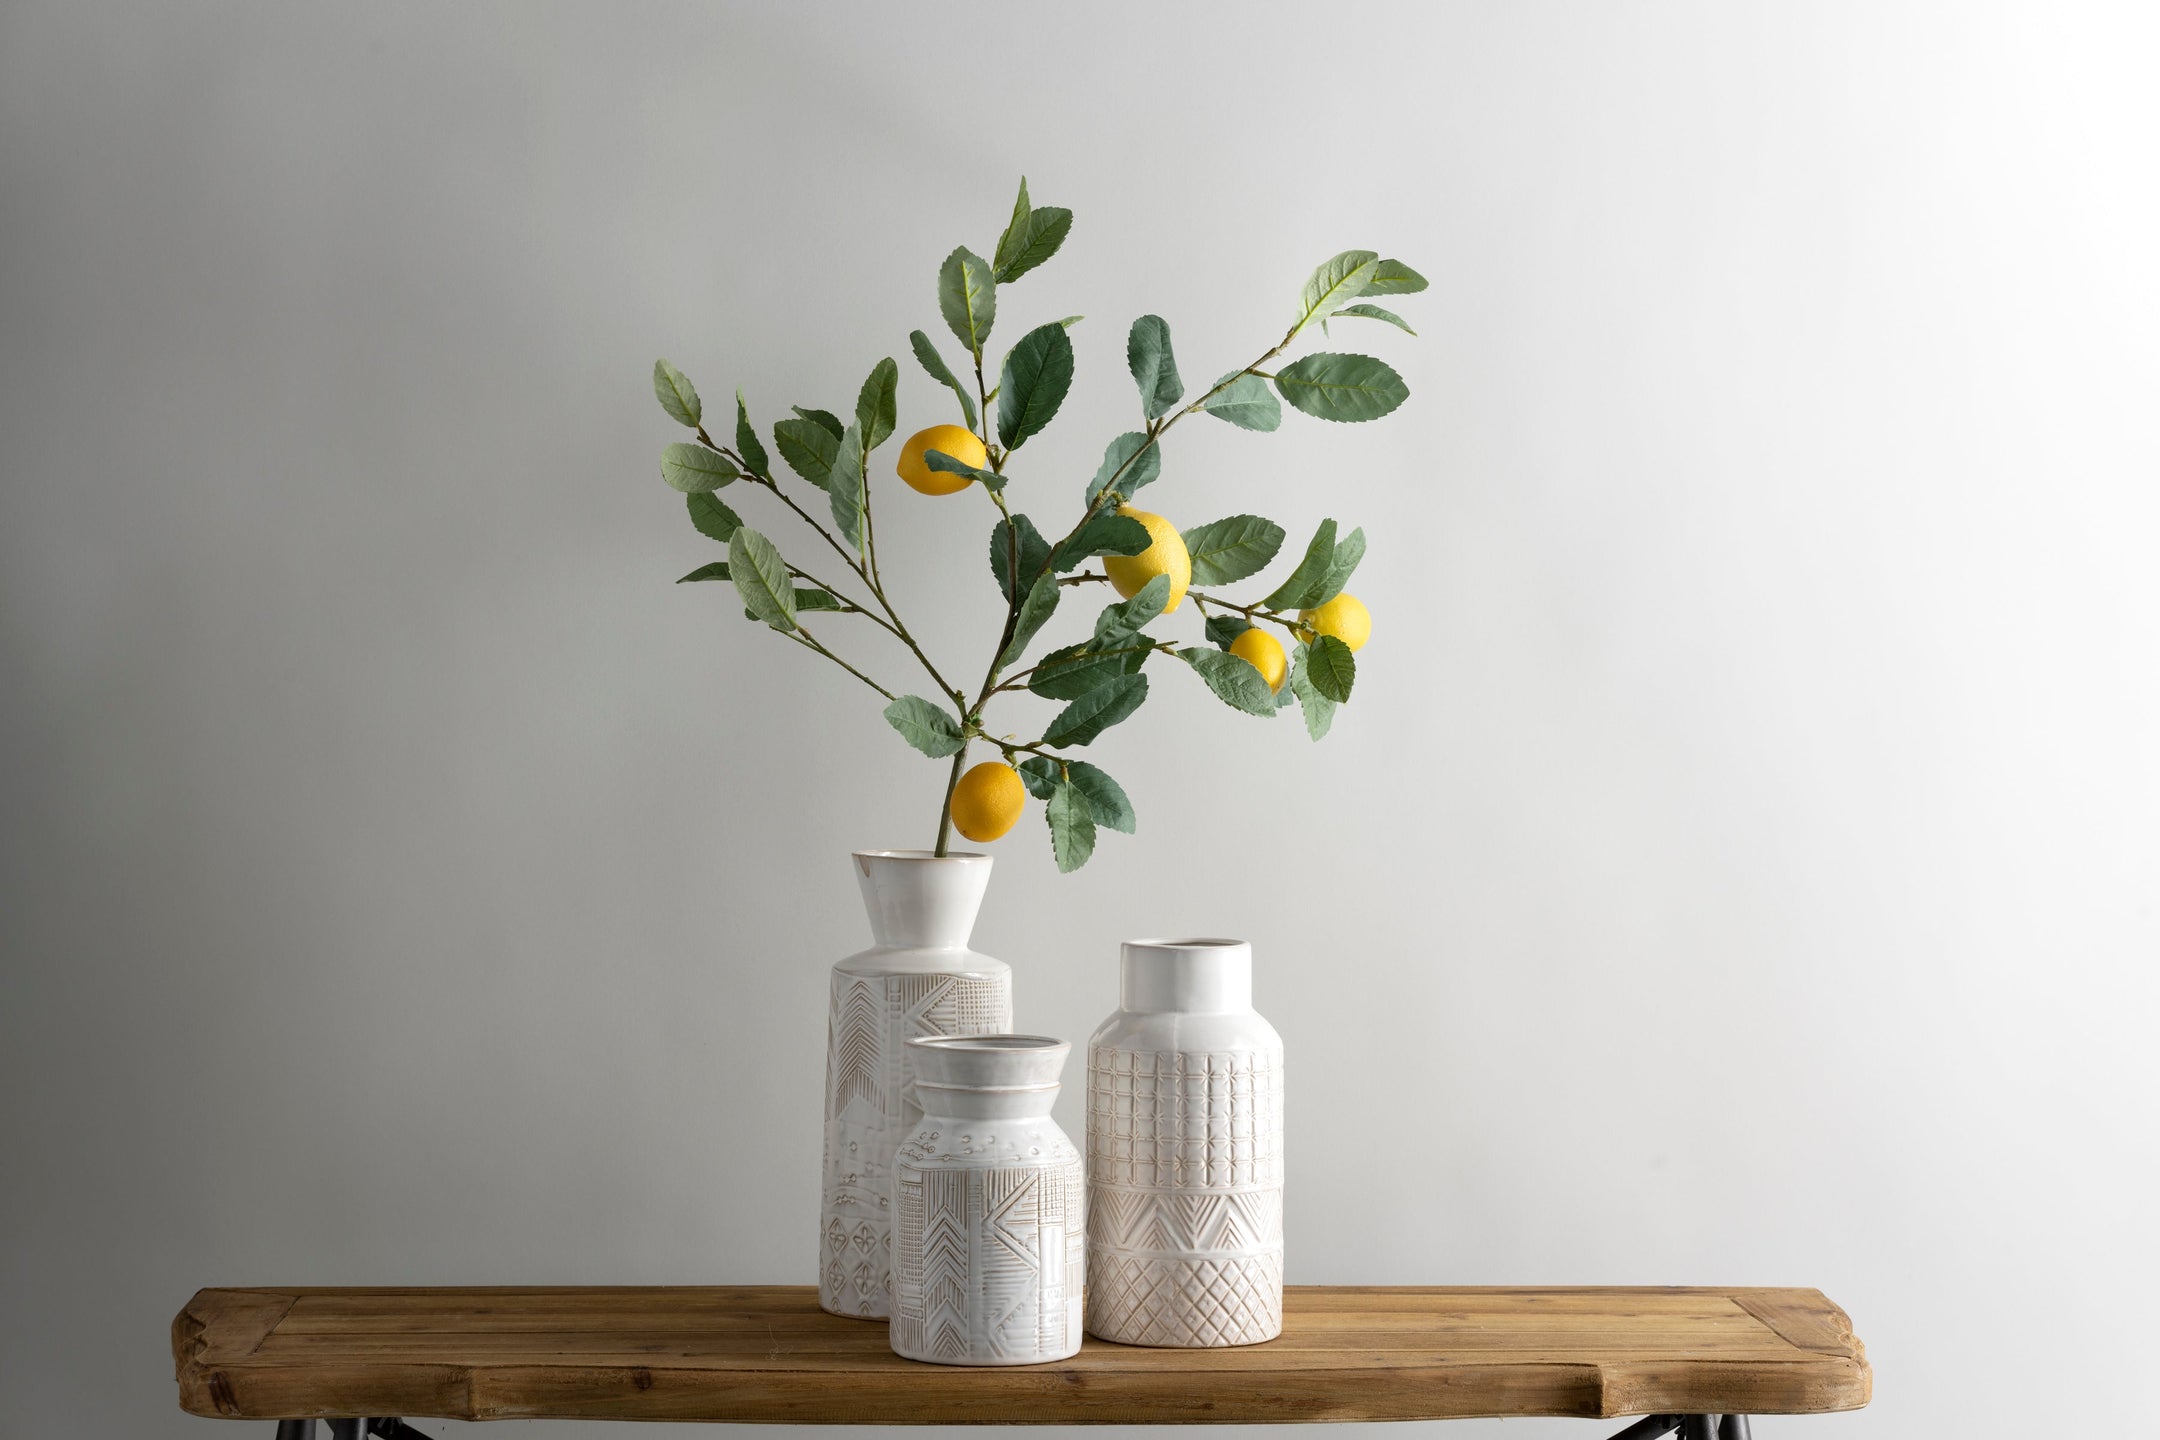 Buy Small Austin Vase, Ivory by Shiraleah